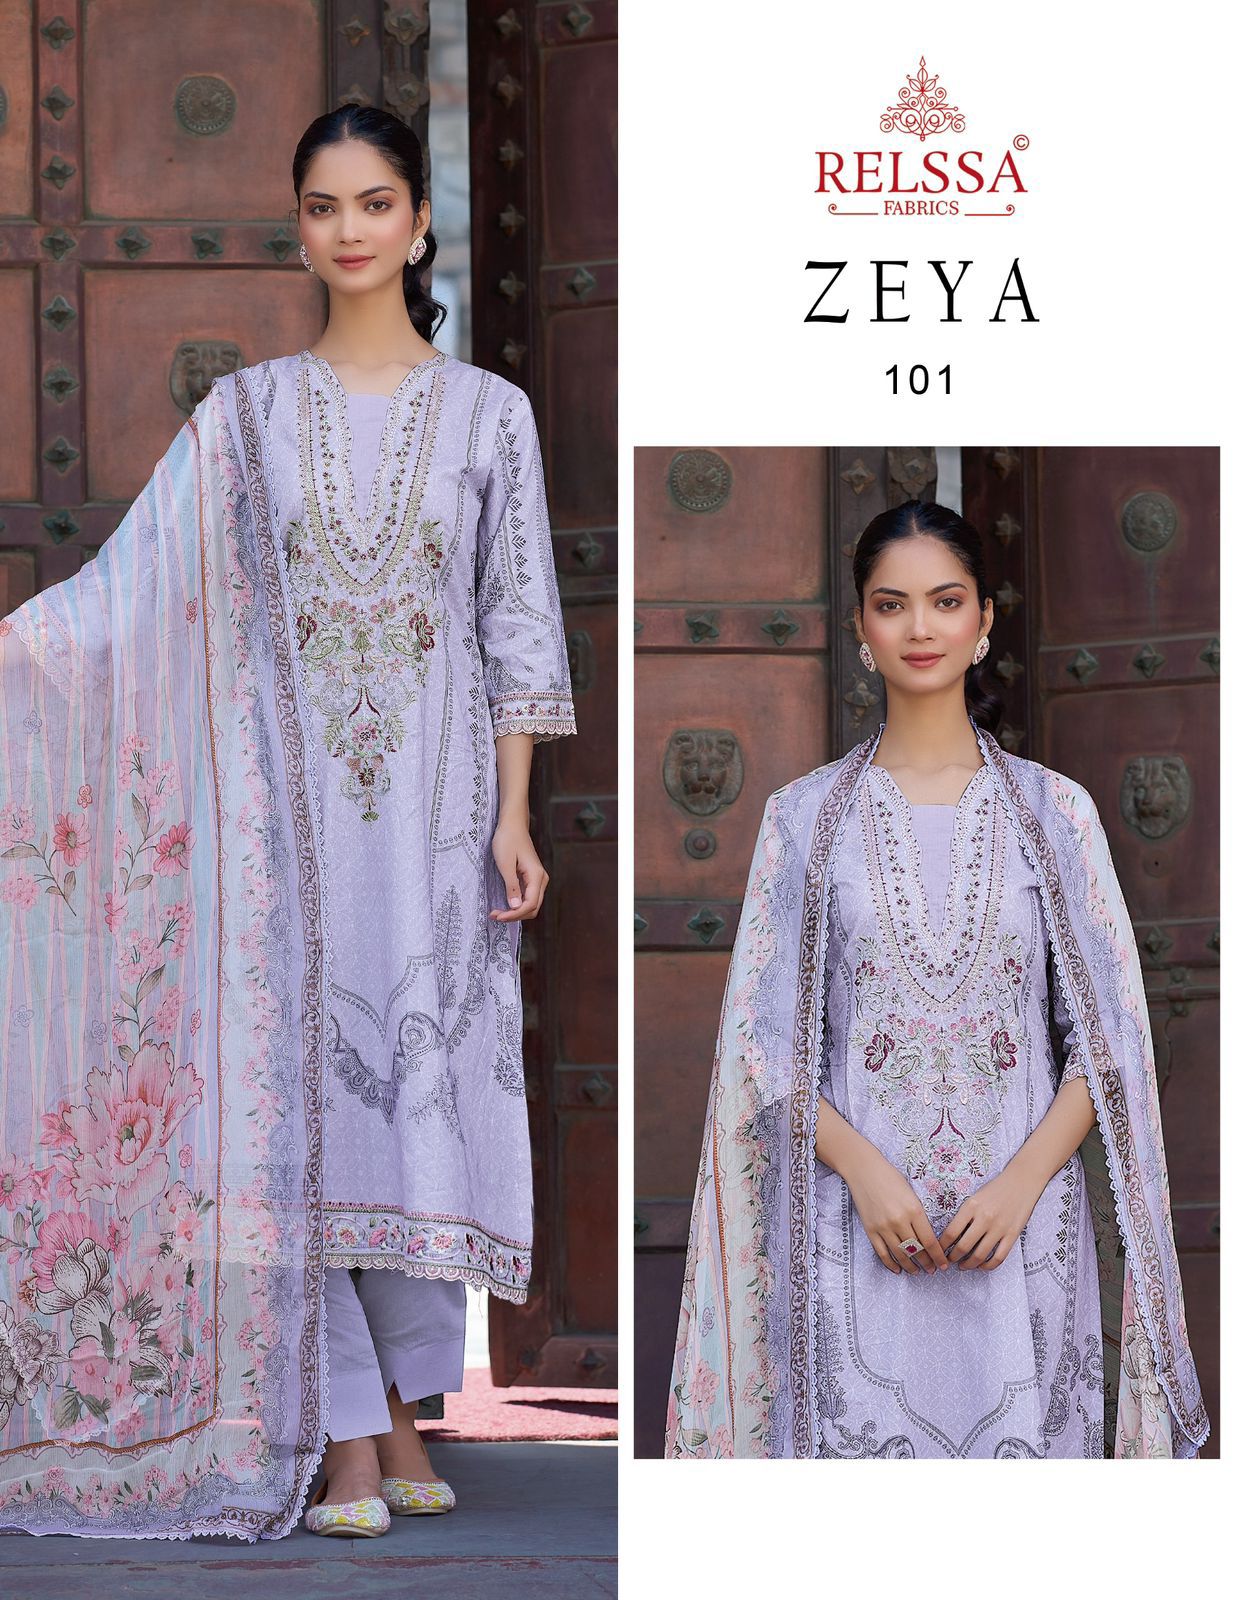 Zeya Relssa Fabrics Cotton Lawn Pant Style Suits